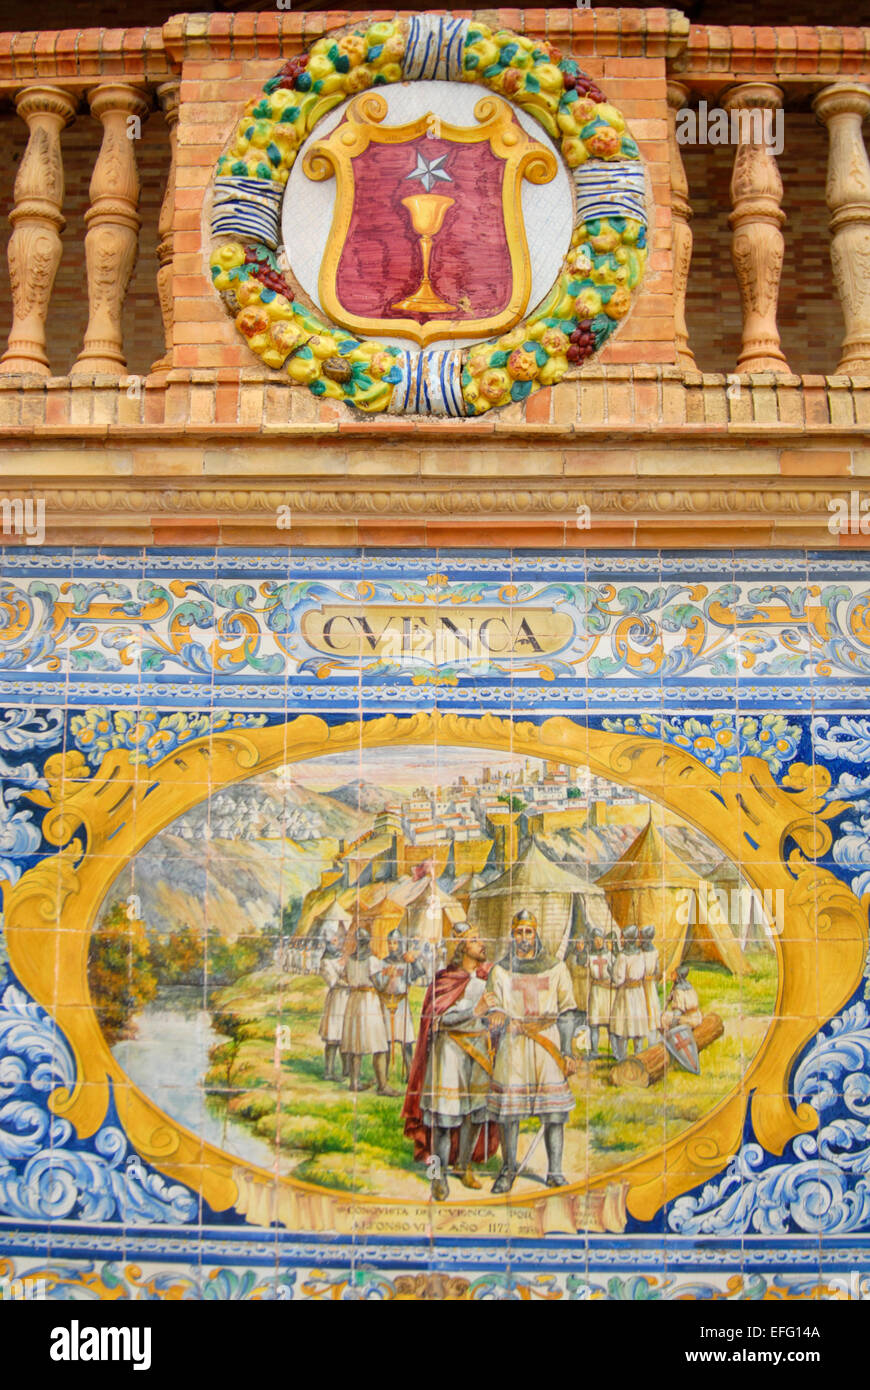 Plaza de España, keramische Wandkunst, Fliesen, Sevilla, Spanien Stockfoto